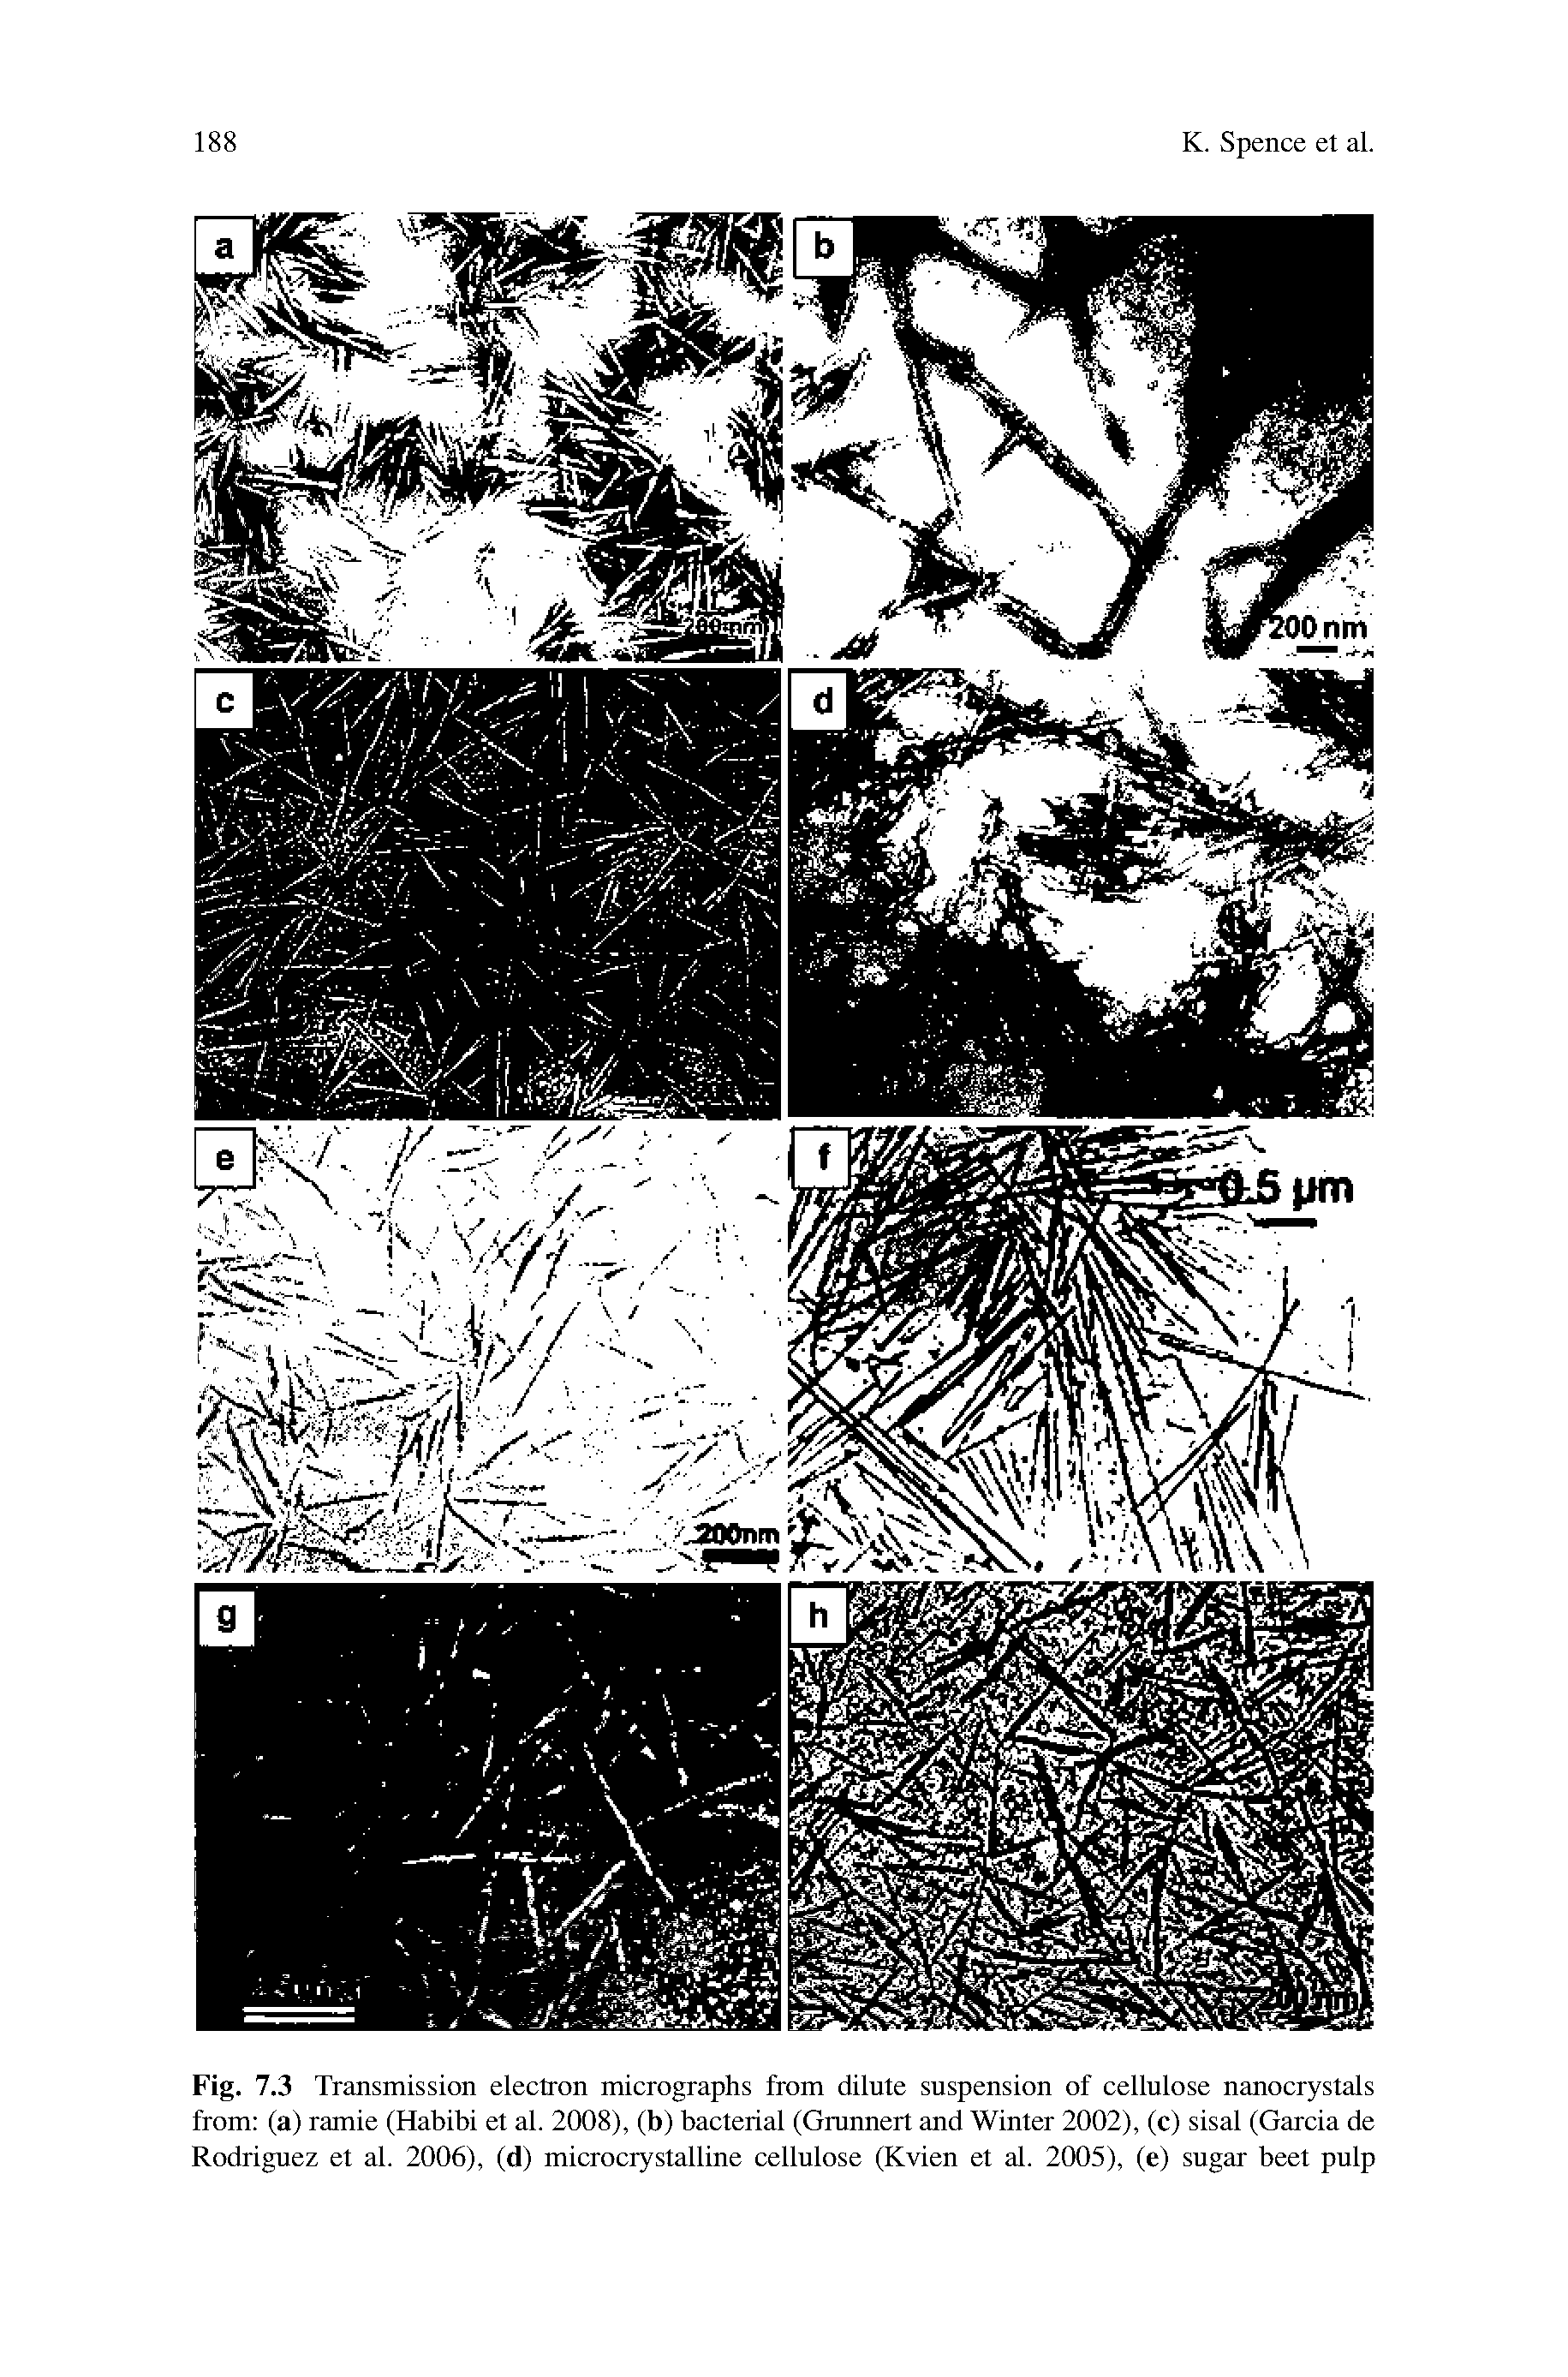 Fig. 7.3 Transmission electron micrographs from dilute suspension of cellulose nanocrystals from (a) ramie (Habibi et al. 2008), (b) bacterial (Grunnert and Winter 2002), (c) sisal (Garcia de Rodriguez et al. 2006), (d) microcrystalline cellulose (Kvien et al. 2005), (e) sugar beet pulp...